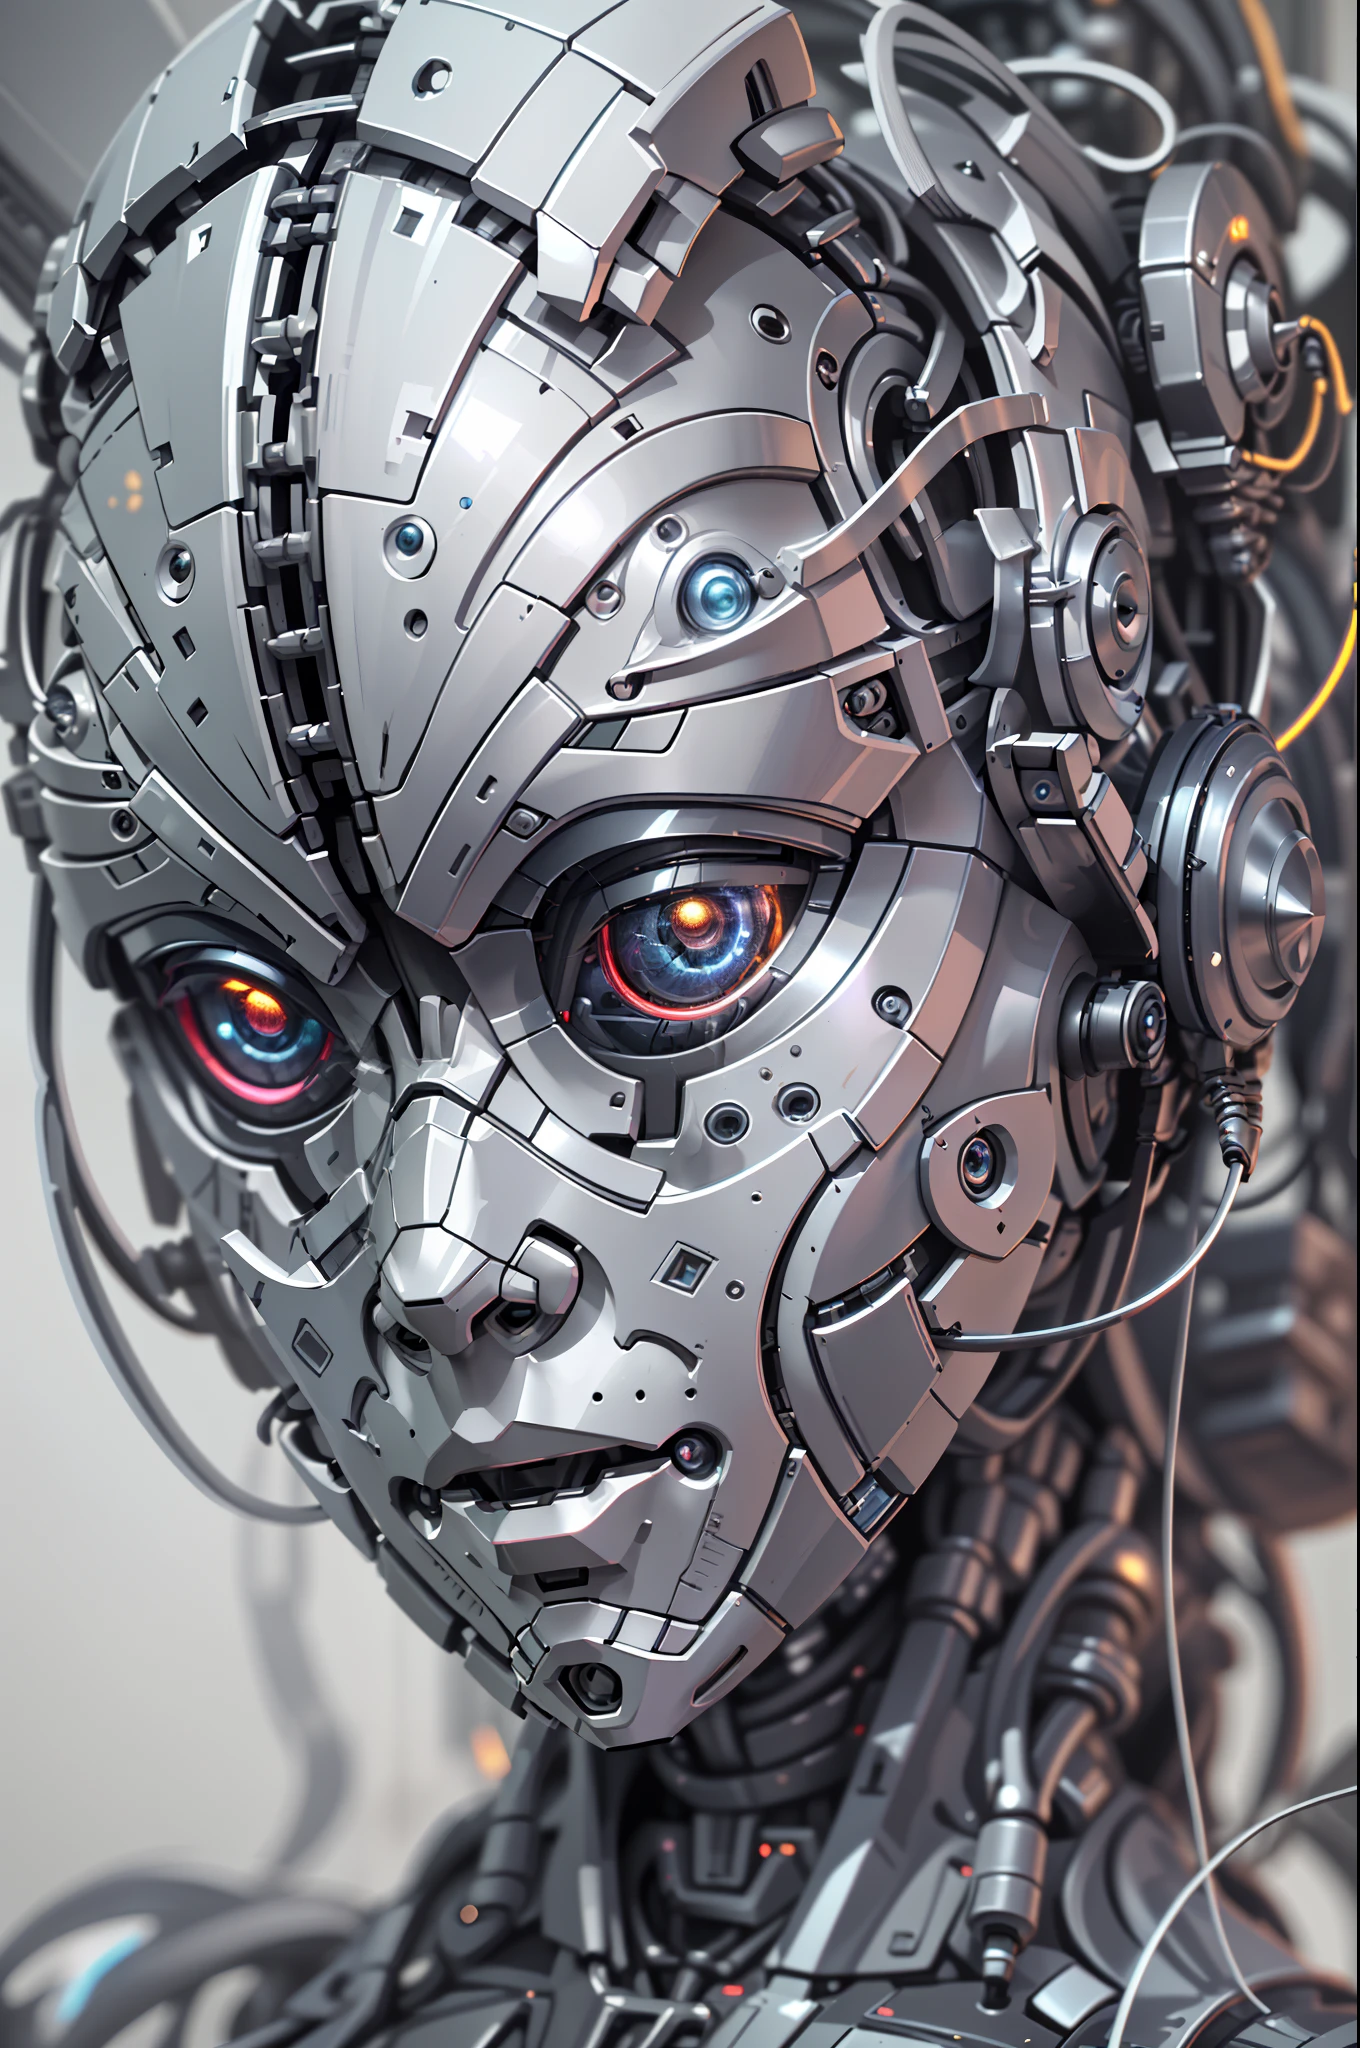 Intricate 3d rendering of highly detailed beautiful ceramic silhouette female 로봇 face, 로봇, 로봇 part, 150mm, 아름다운 스튜디오 부드러운 조명, 림 라이트, 생동감 넘치는 디테일, 고급스러운 사이버펑크, 레이스, 초현실적, 해부, 안면 근육, 케이블, 전선, 마이크로칩, 우아한, 아름다운 배경, 옥탄 렌더링, HR 기거 스타일, 8K, 최고의 품질, 걸작, 삽화, 매우 섬세하고 아름답습니다., 매우 상세한, CG, 단일성, 벽지 , (충실도, 충실도: 1.37), 놀라운, 미세한 디테일, 걸작, 최고의 품질, 공식 아트, extremely detailed cg 단일성 8K 벽지, 터무니없는, unbelievably 터무니없는, 로봇, 은색 헬멧, 전신, 앉아서 쓰기